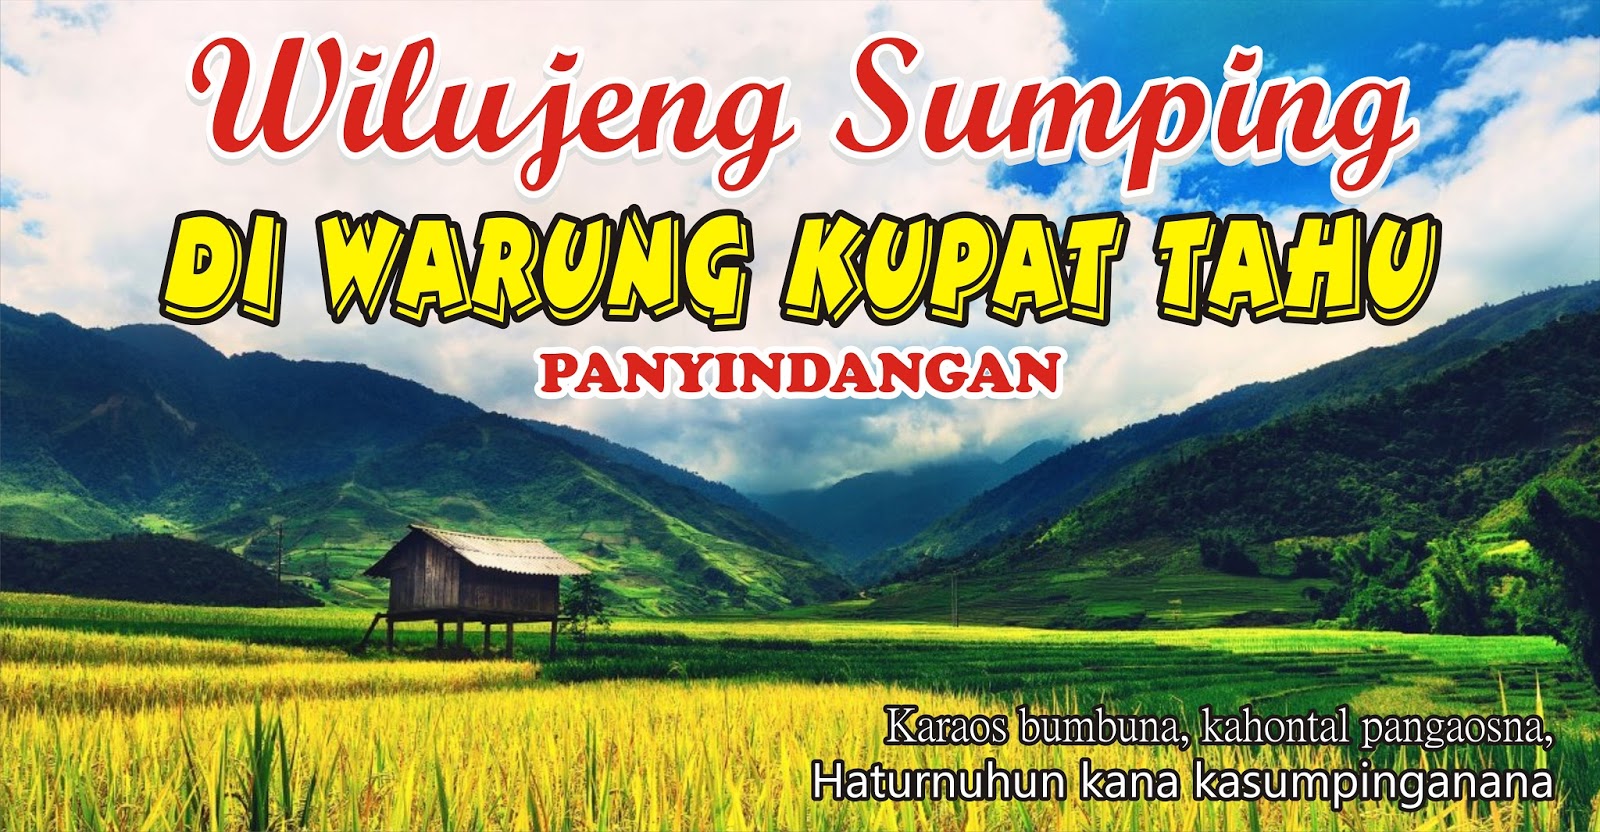 Download Contoh Spanduk Aneka Makanan.cdr  KARYAKU